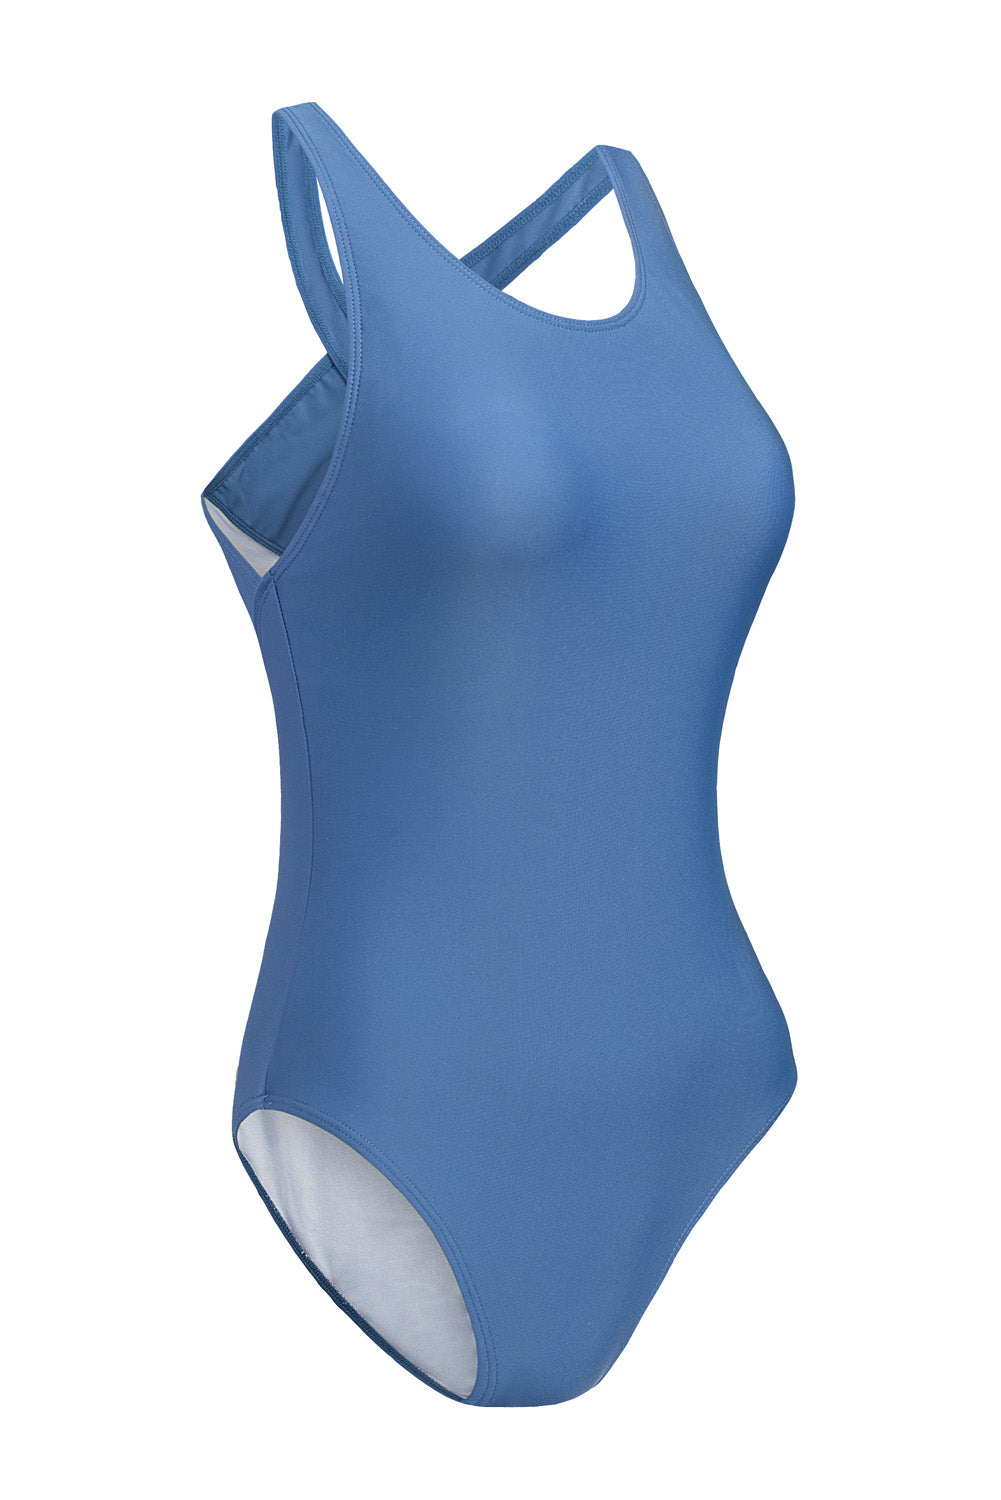 LC443470-5-S, LC443470-5-M, LC443470-5-L, LC443470-5-XL, LC443470-5-2XL, Blue Women's Cross Back Swimwear High Cut One Piece Bathing Suits Swimsuit